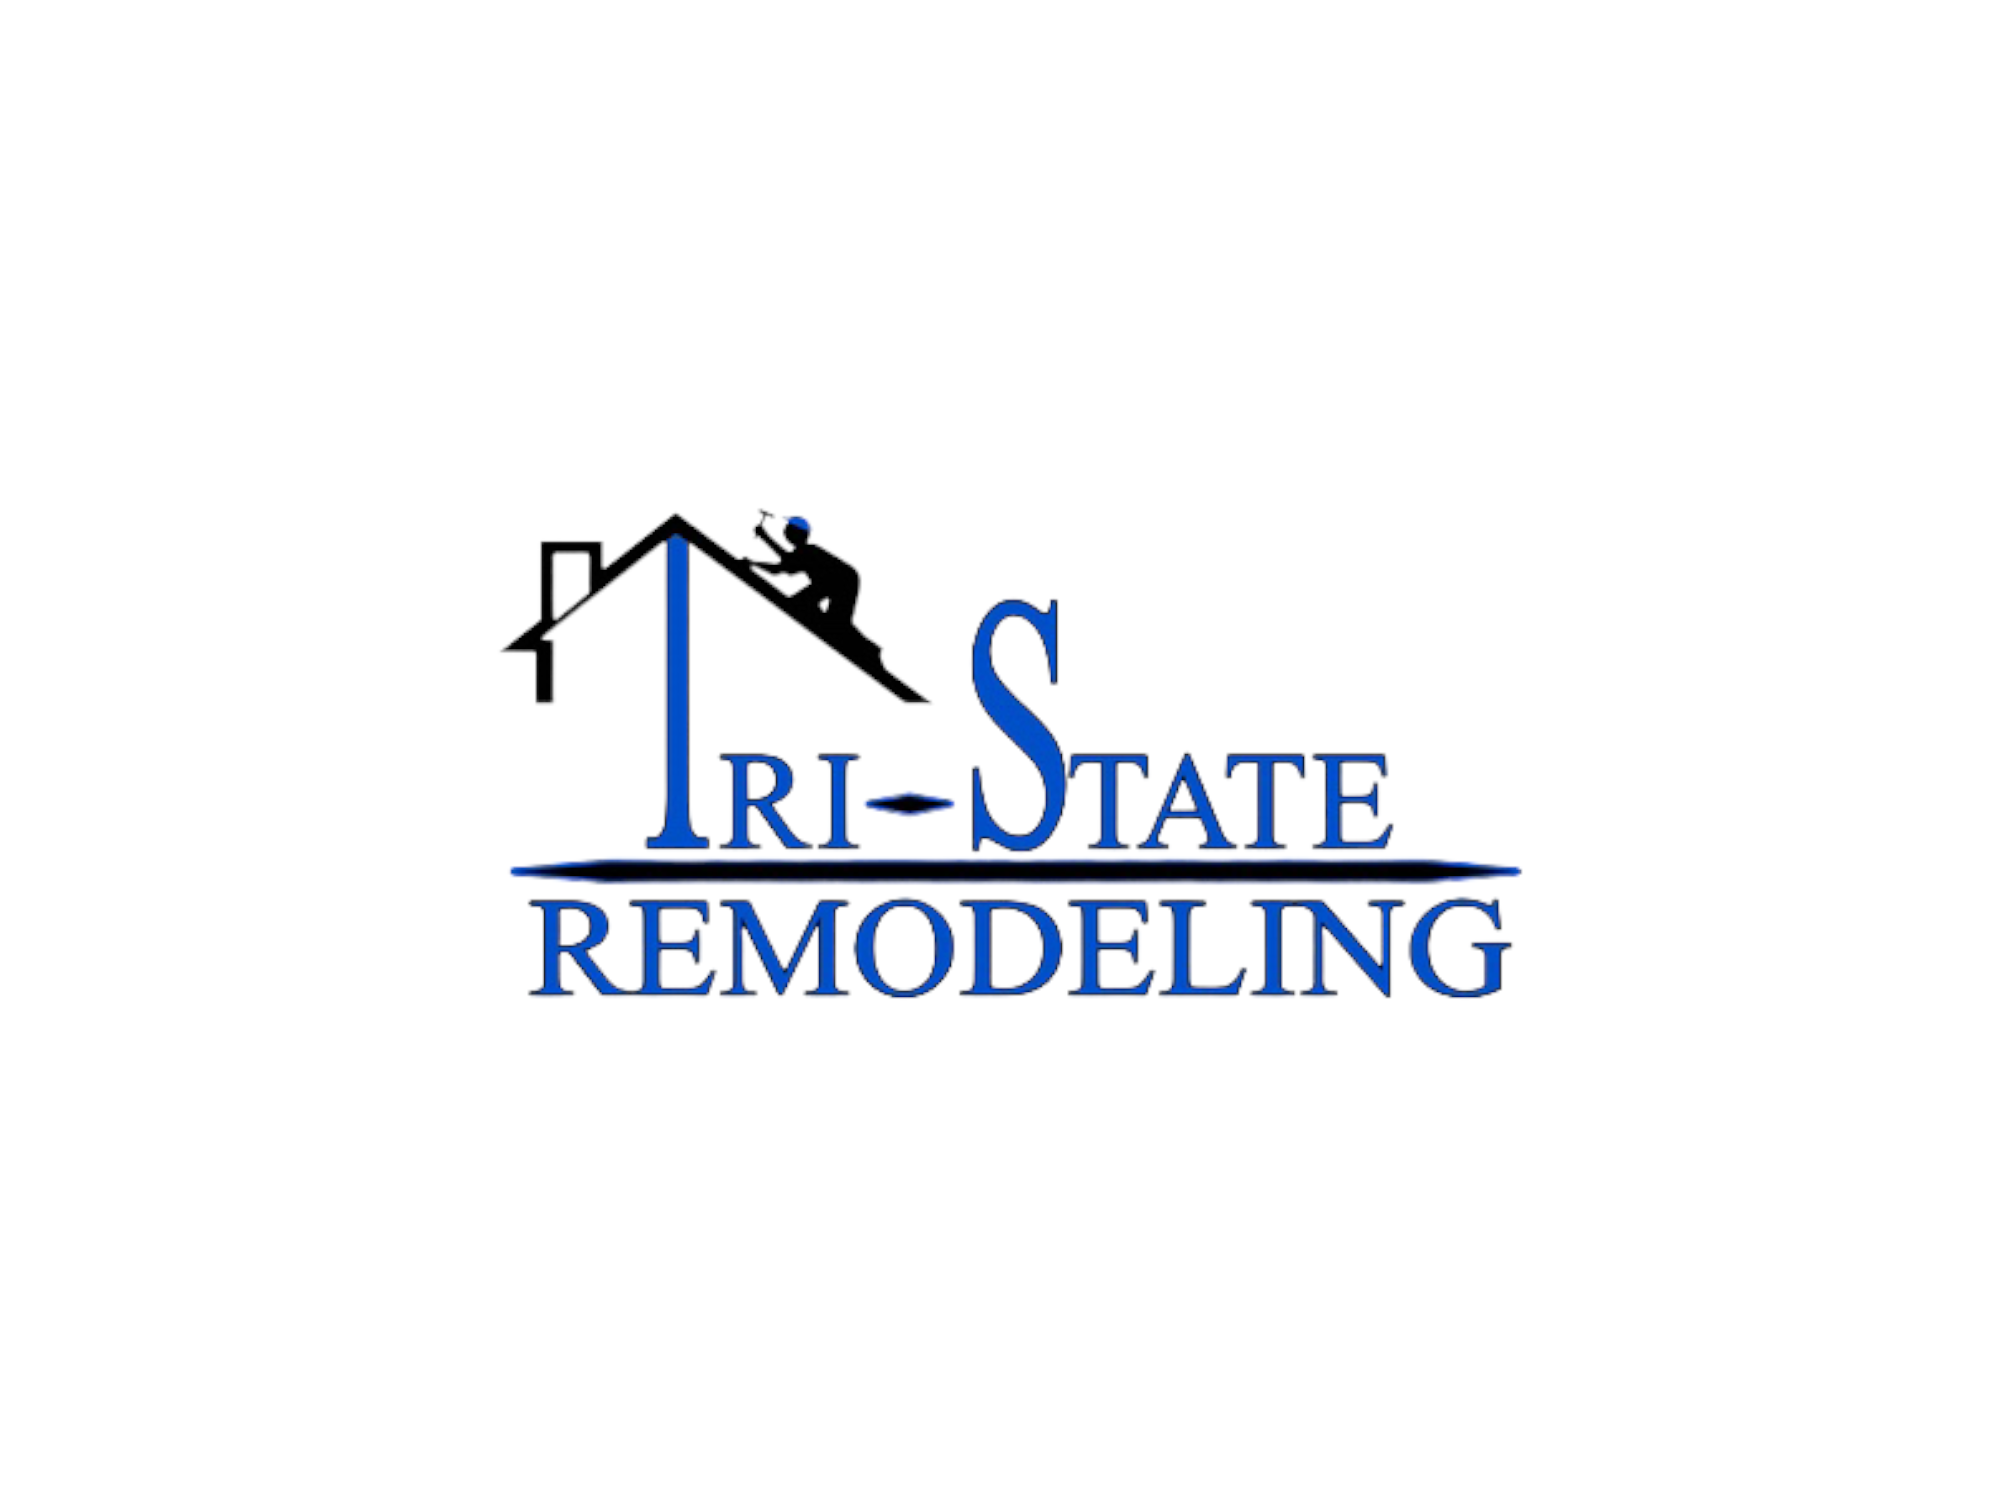 Tri-State Remodeling Corporation Logo